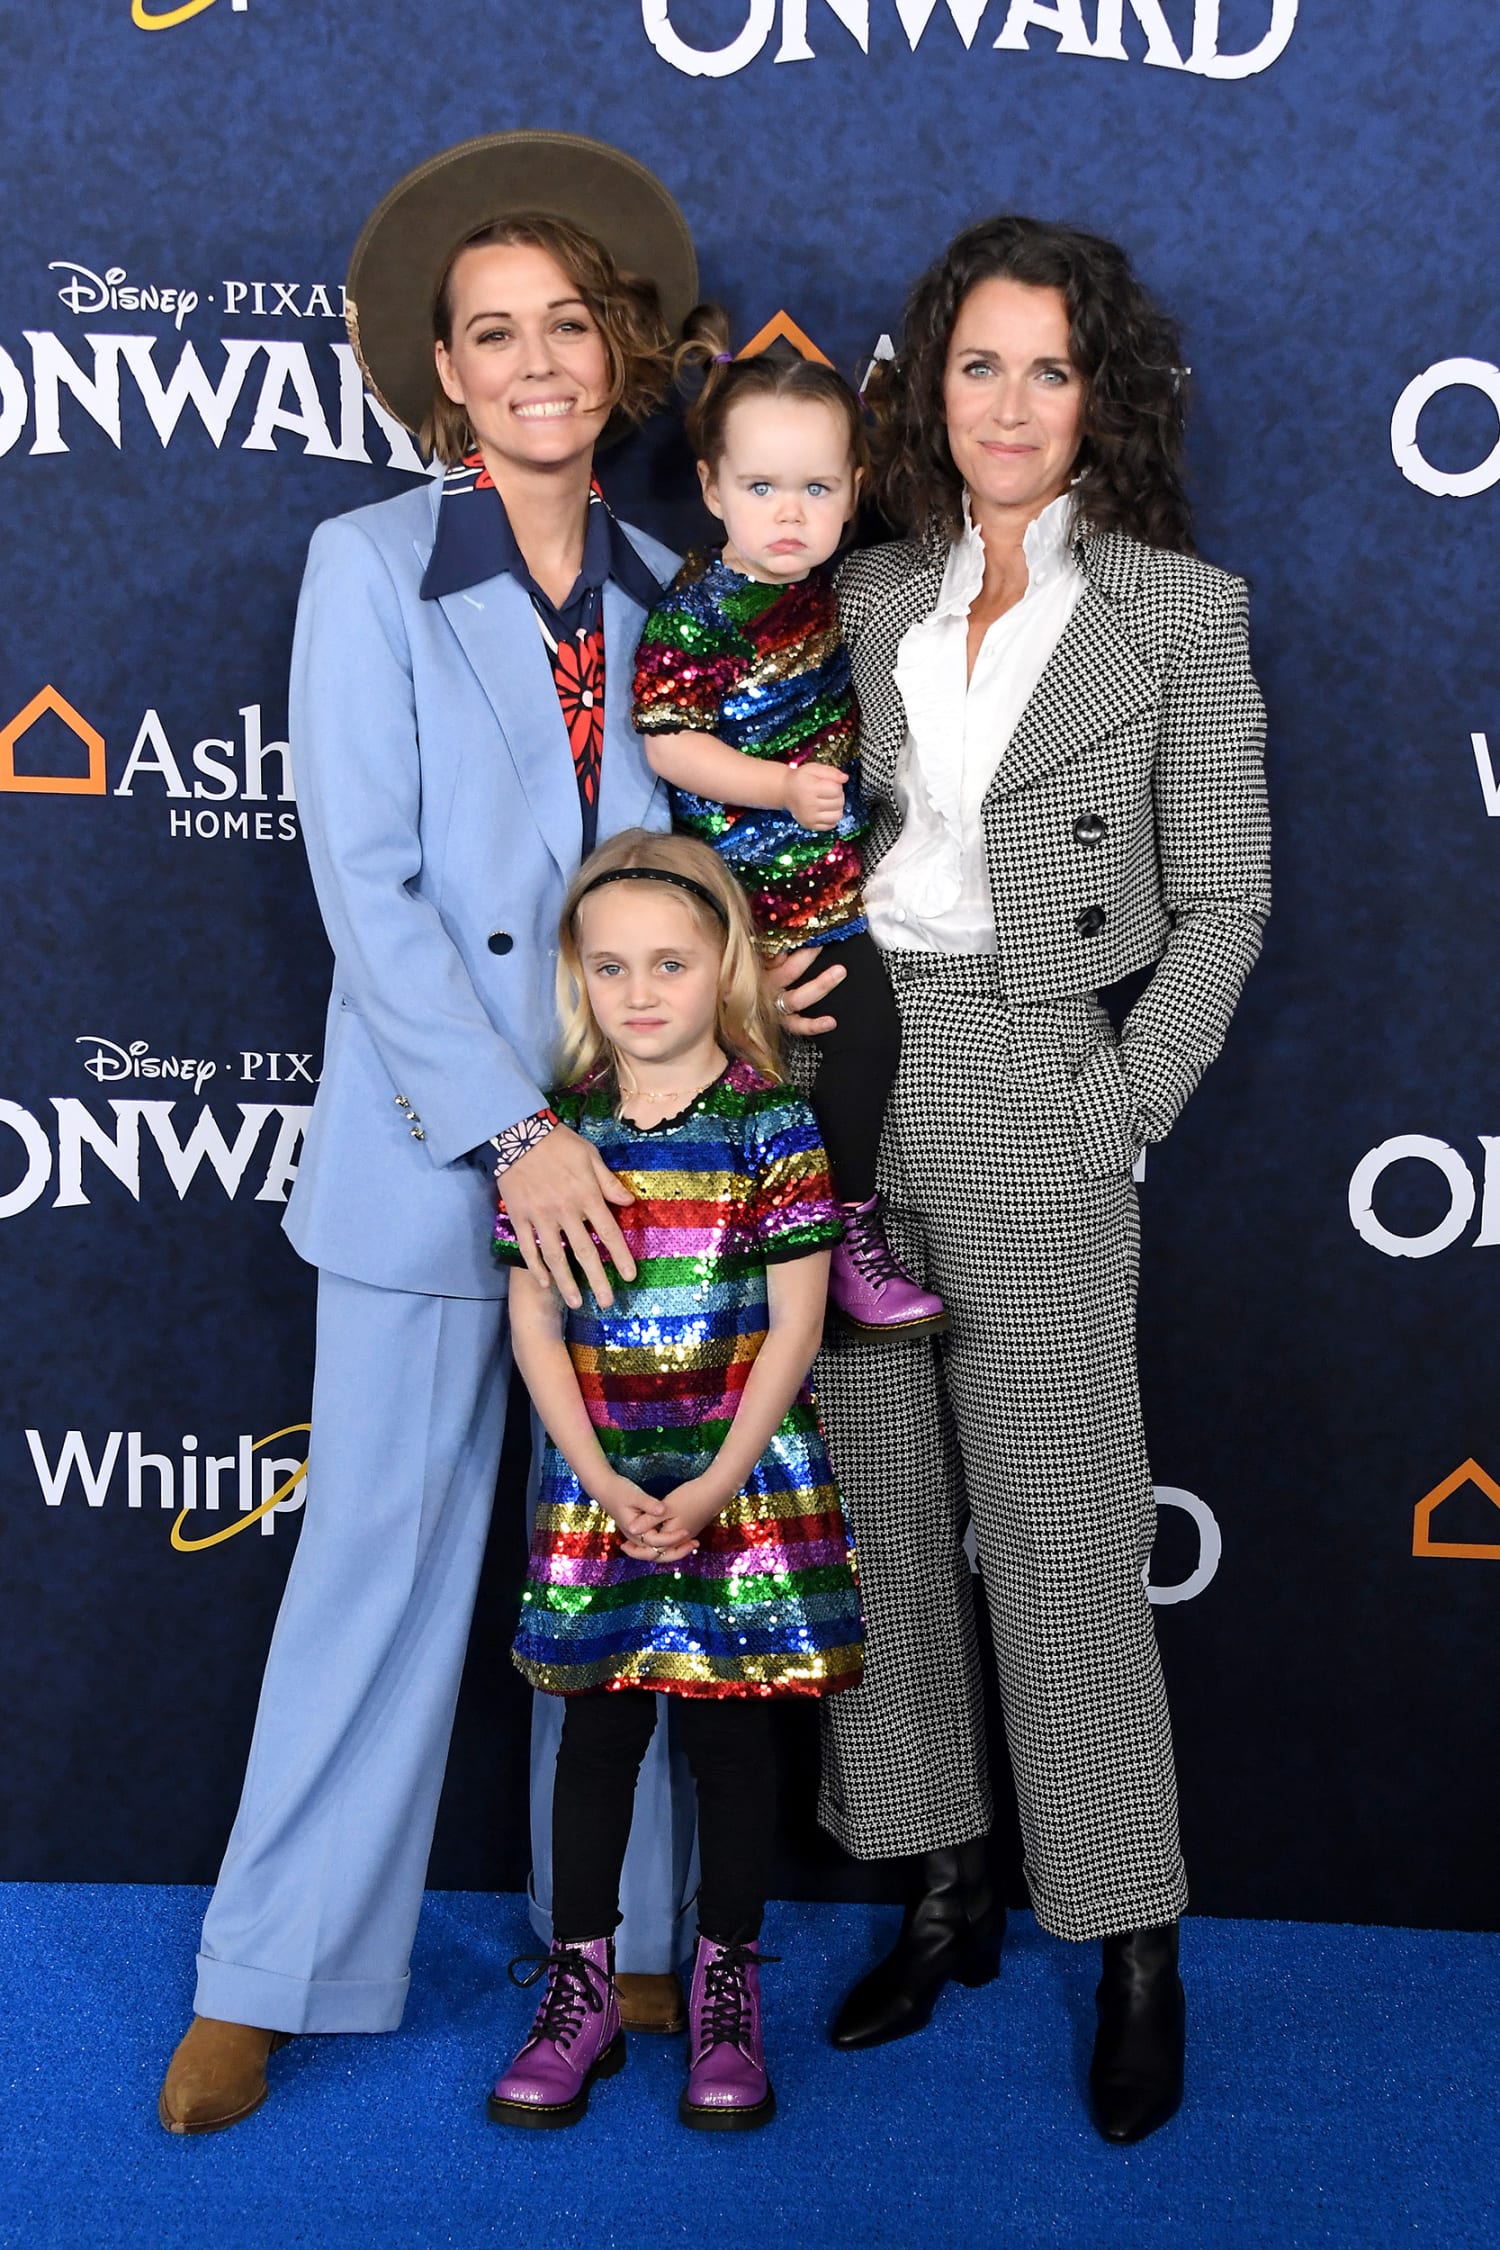 Singer Brandi Carlile on parenting as a LGBTQ+ mom